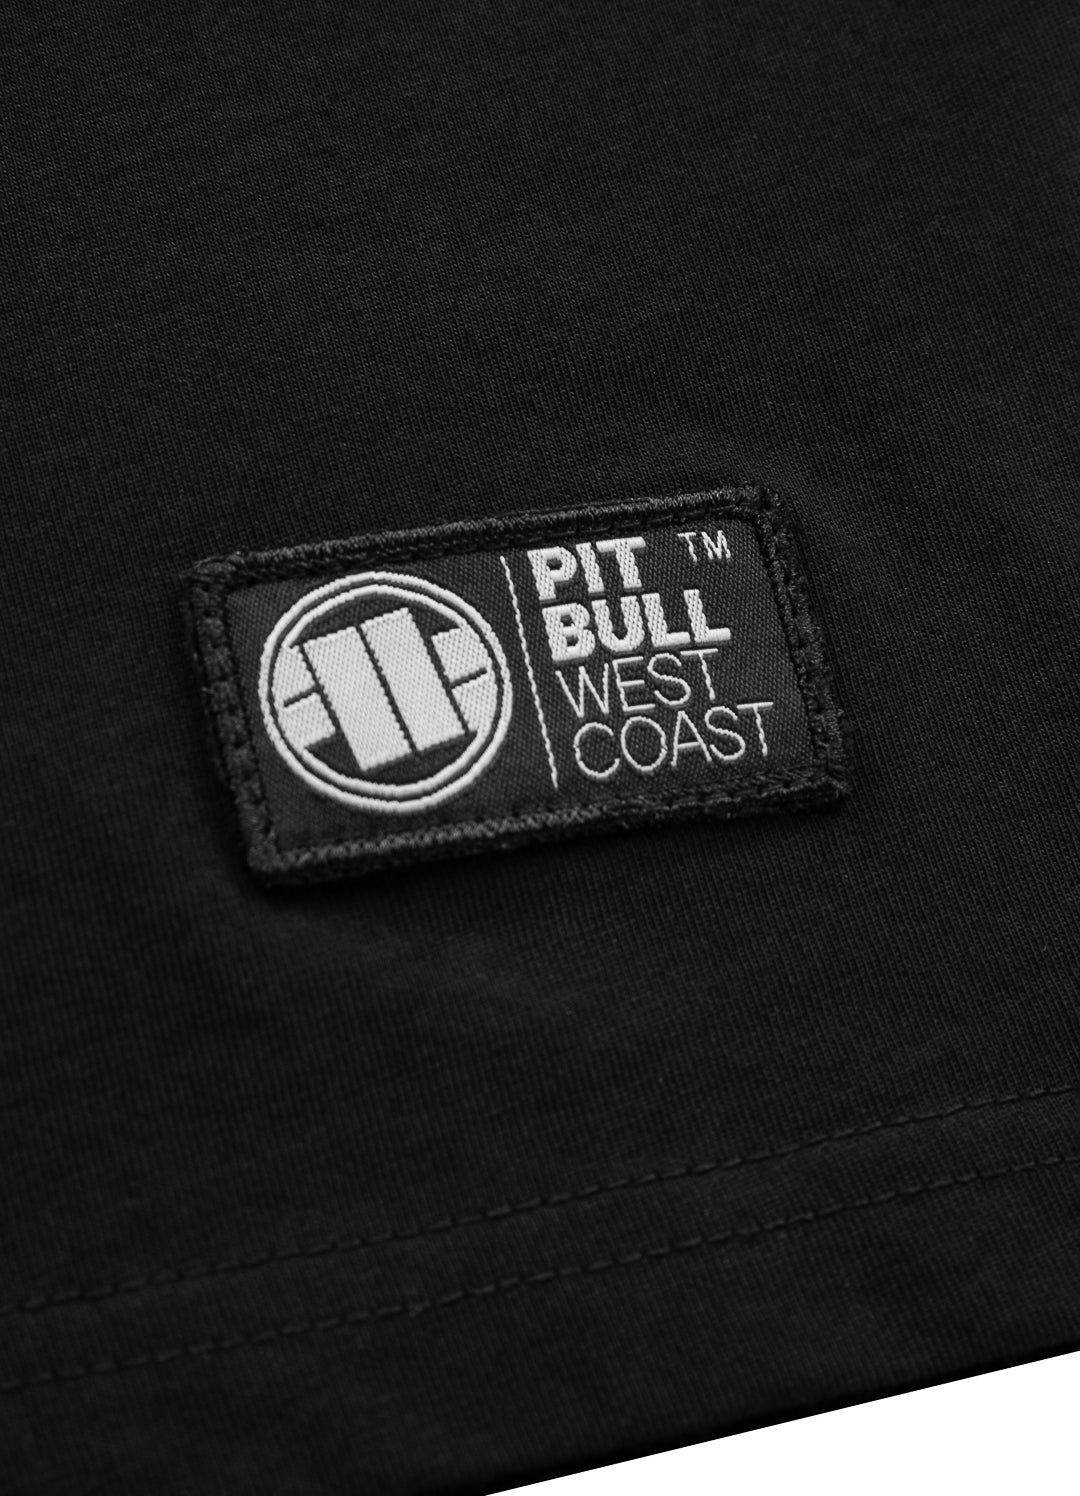 T-shirt KEEP ROLLING 22 Black - Pitbull West Coast International Store 